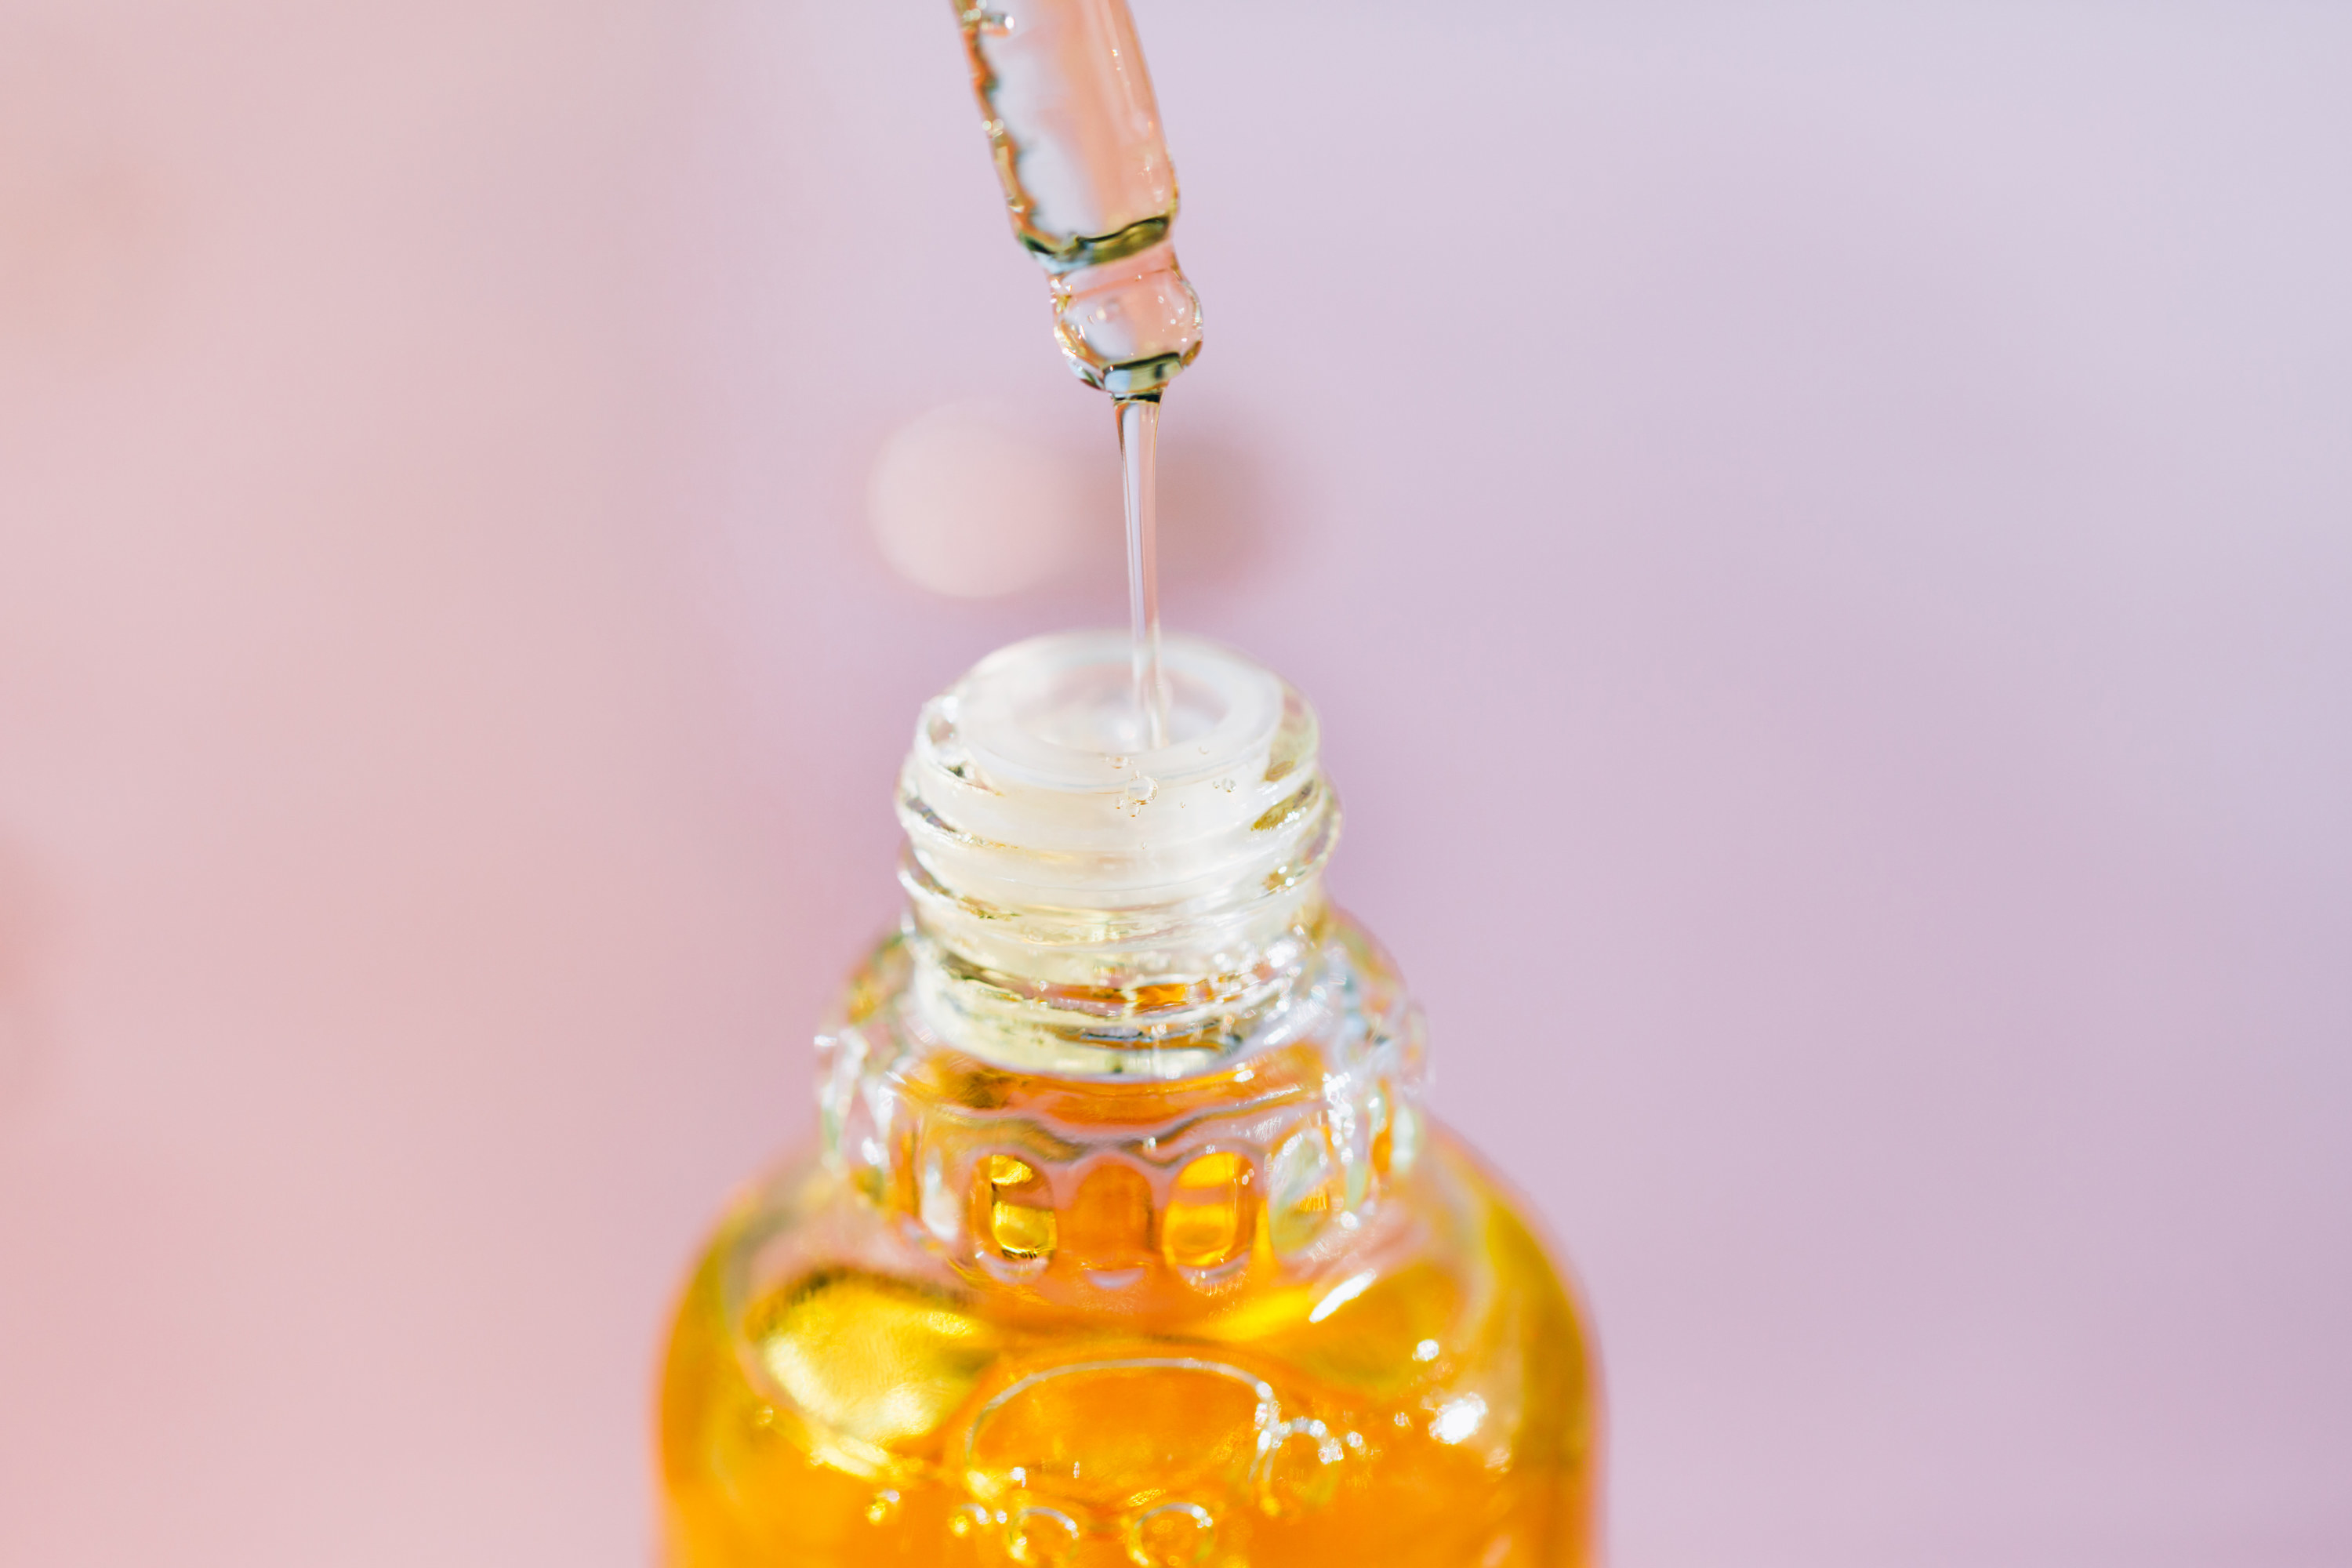 A dropper pouring oil into a bottle